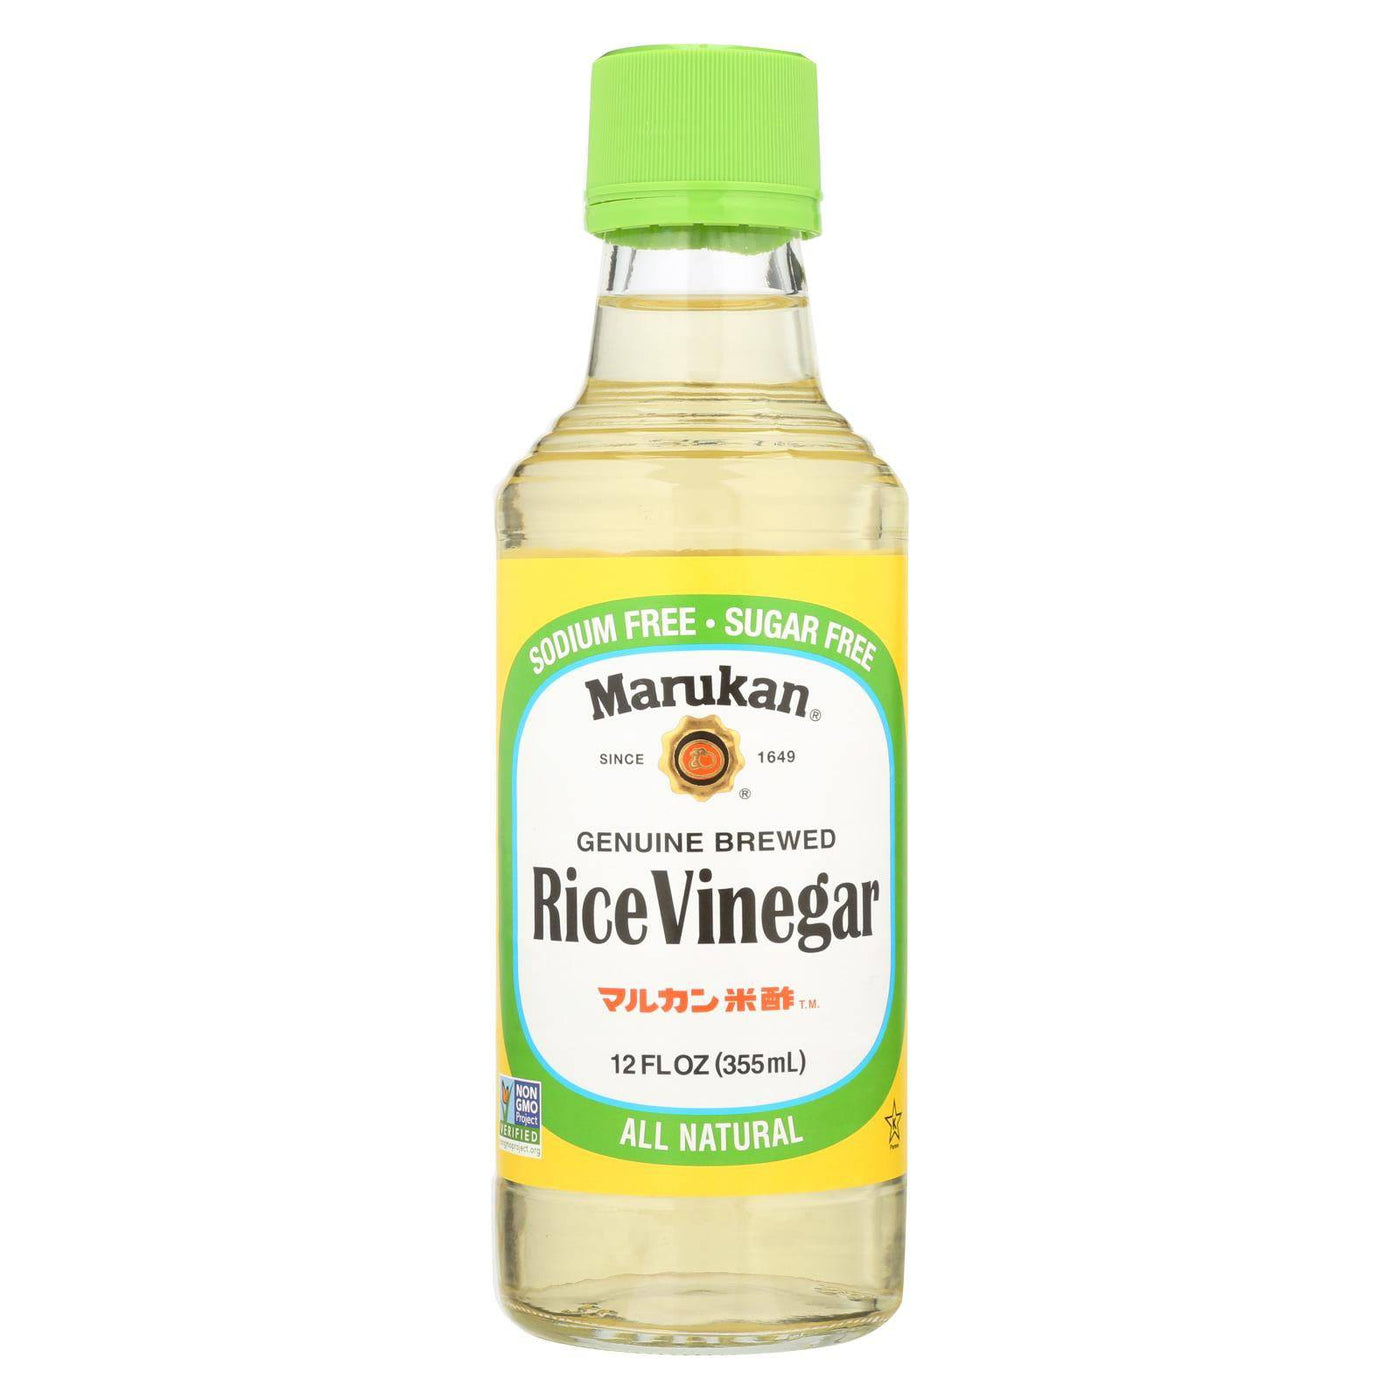 Buy Marukan Rice Vinegar - Genuine Brewed - Case Of 6 - 12 Fl Oz.  at OnlyNaturals.us